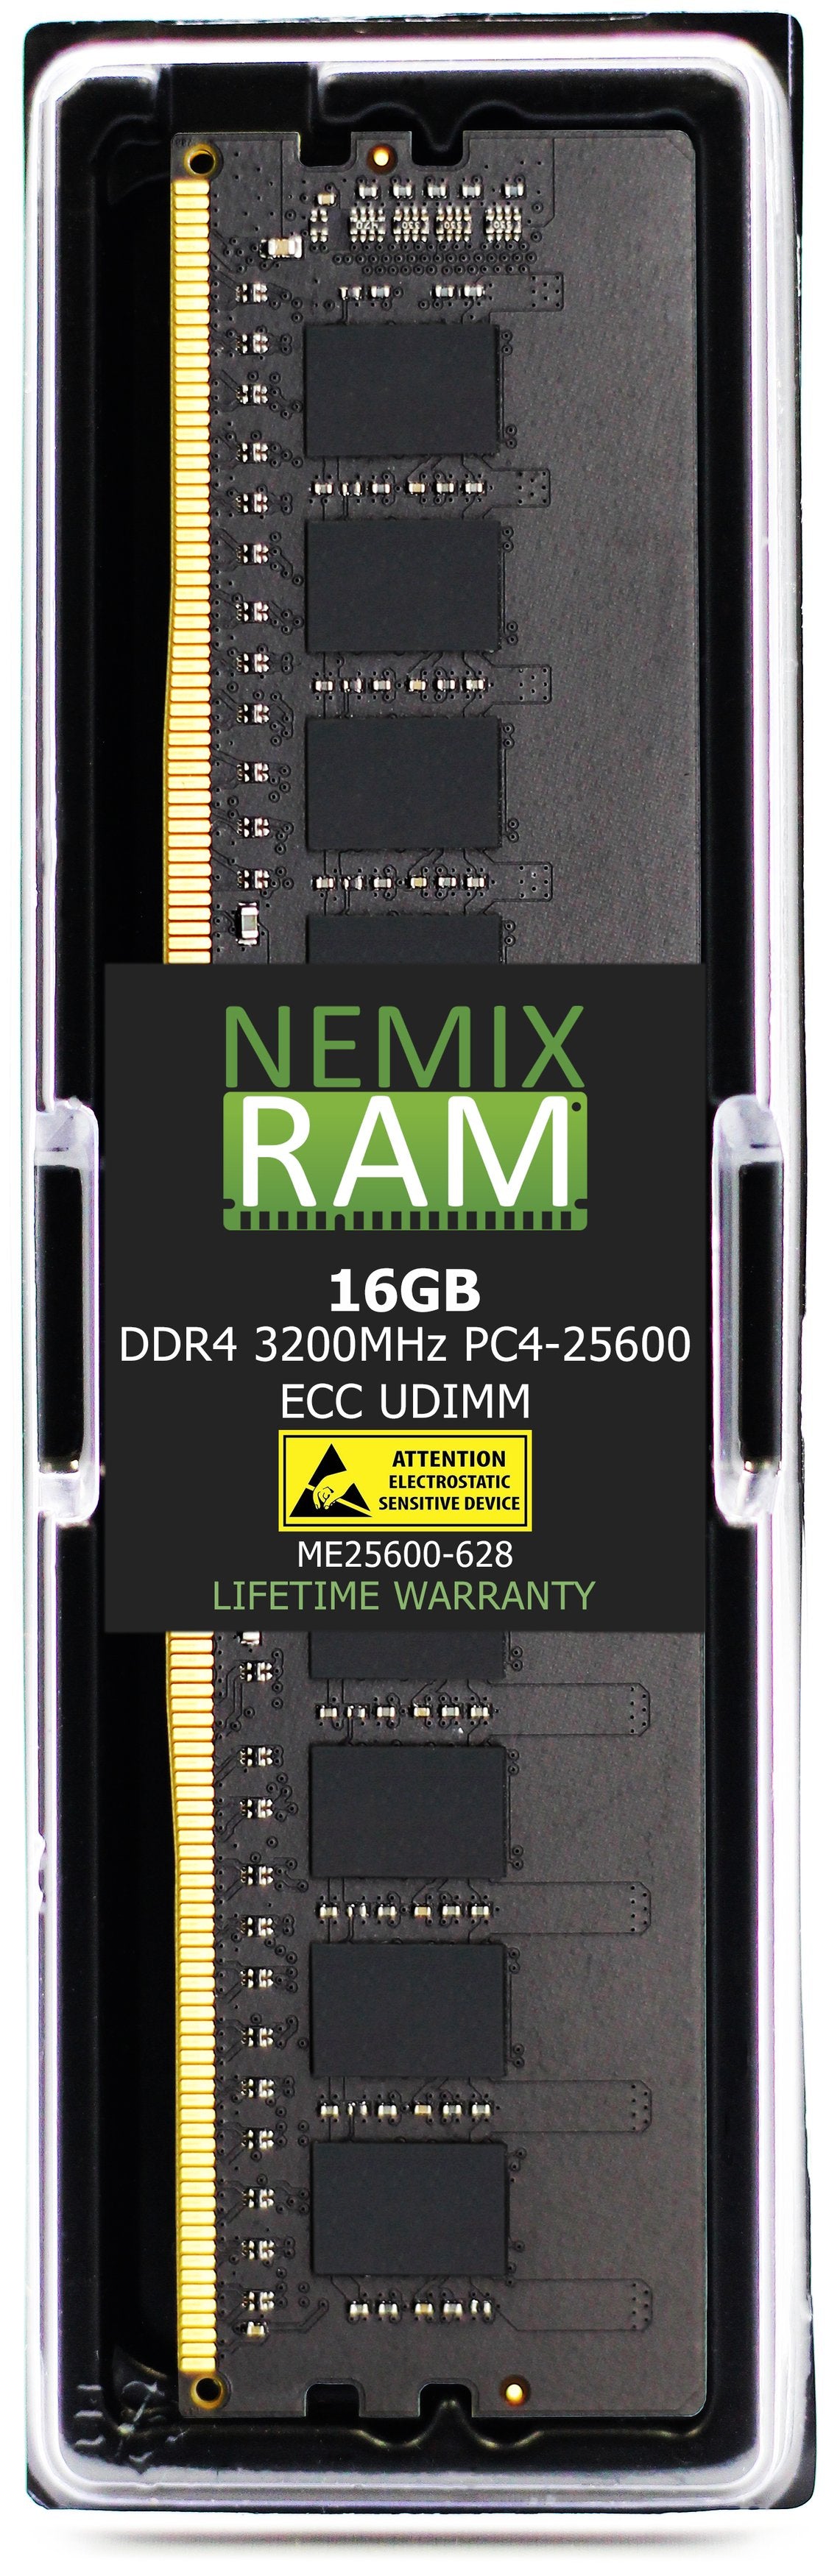 32GB DDR4 3200MHZ PC4-25600 ECC UDIMM Compatible with Supermicro MEM-DR416LD-EU32